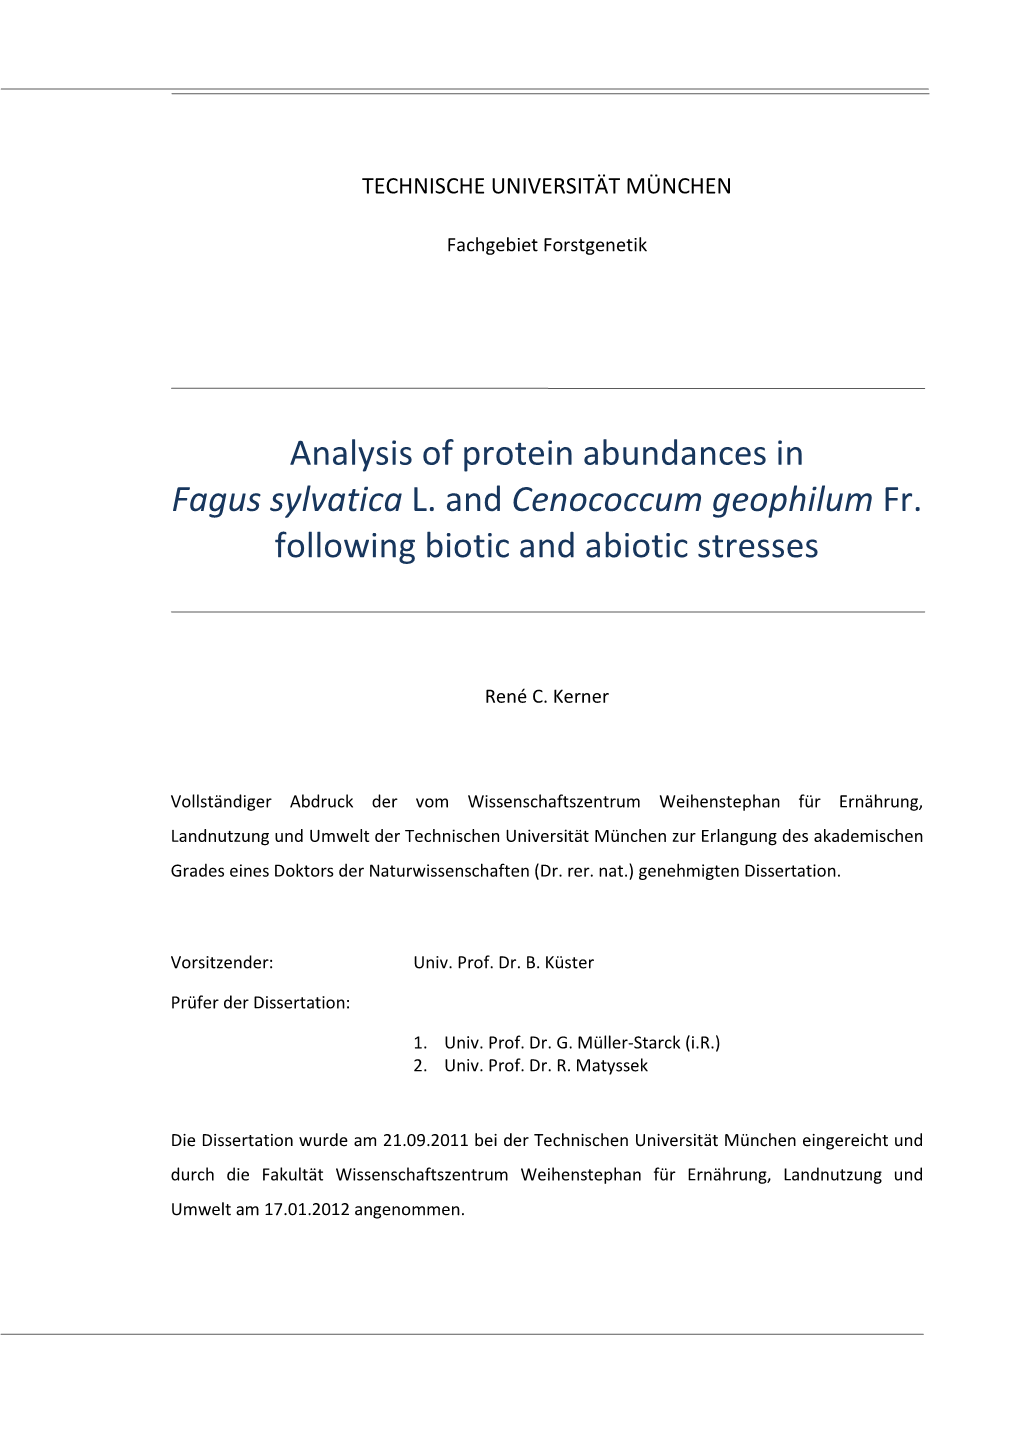 Analysis of Protein Abundances in Fagus Sylvatica L. and Cenococcum Geophilum Fr